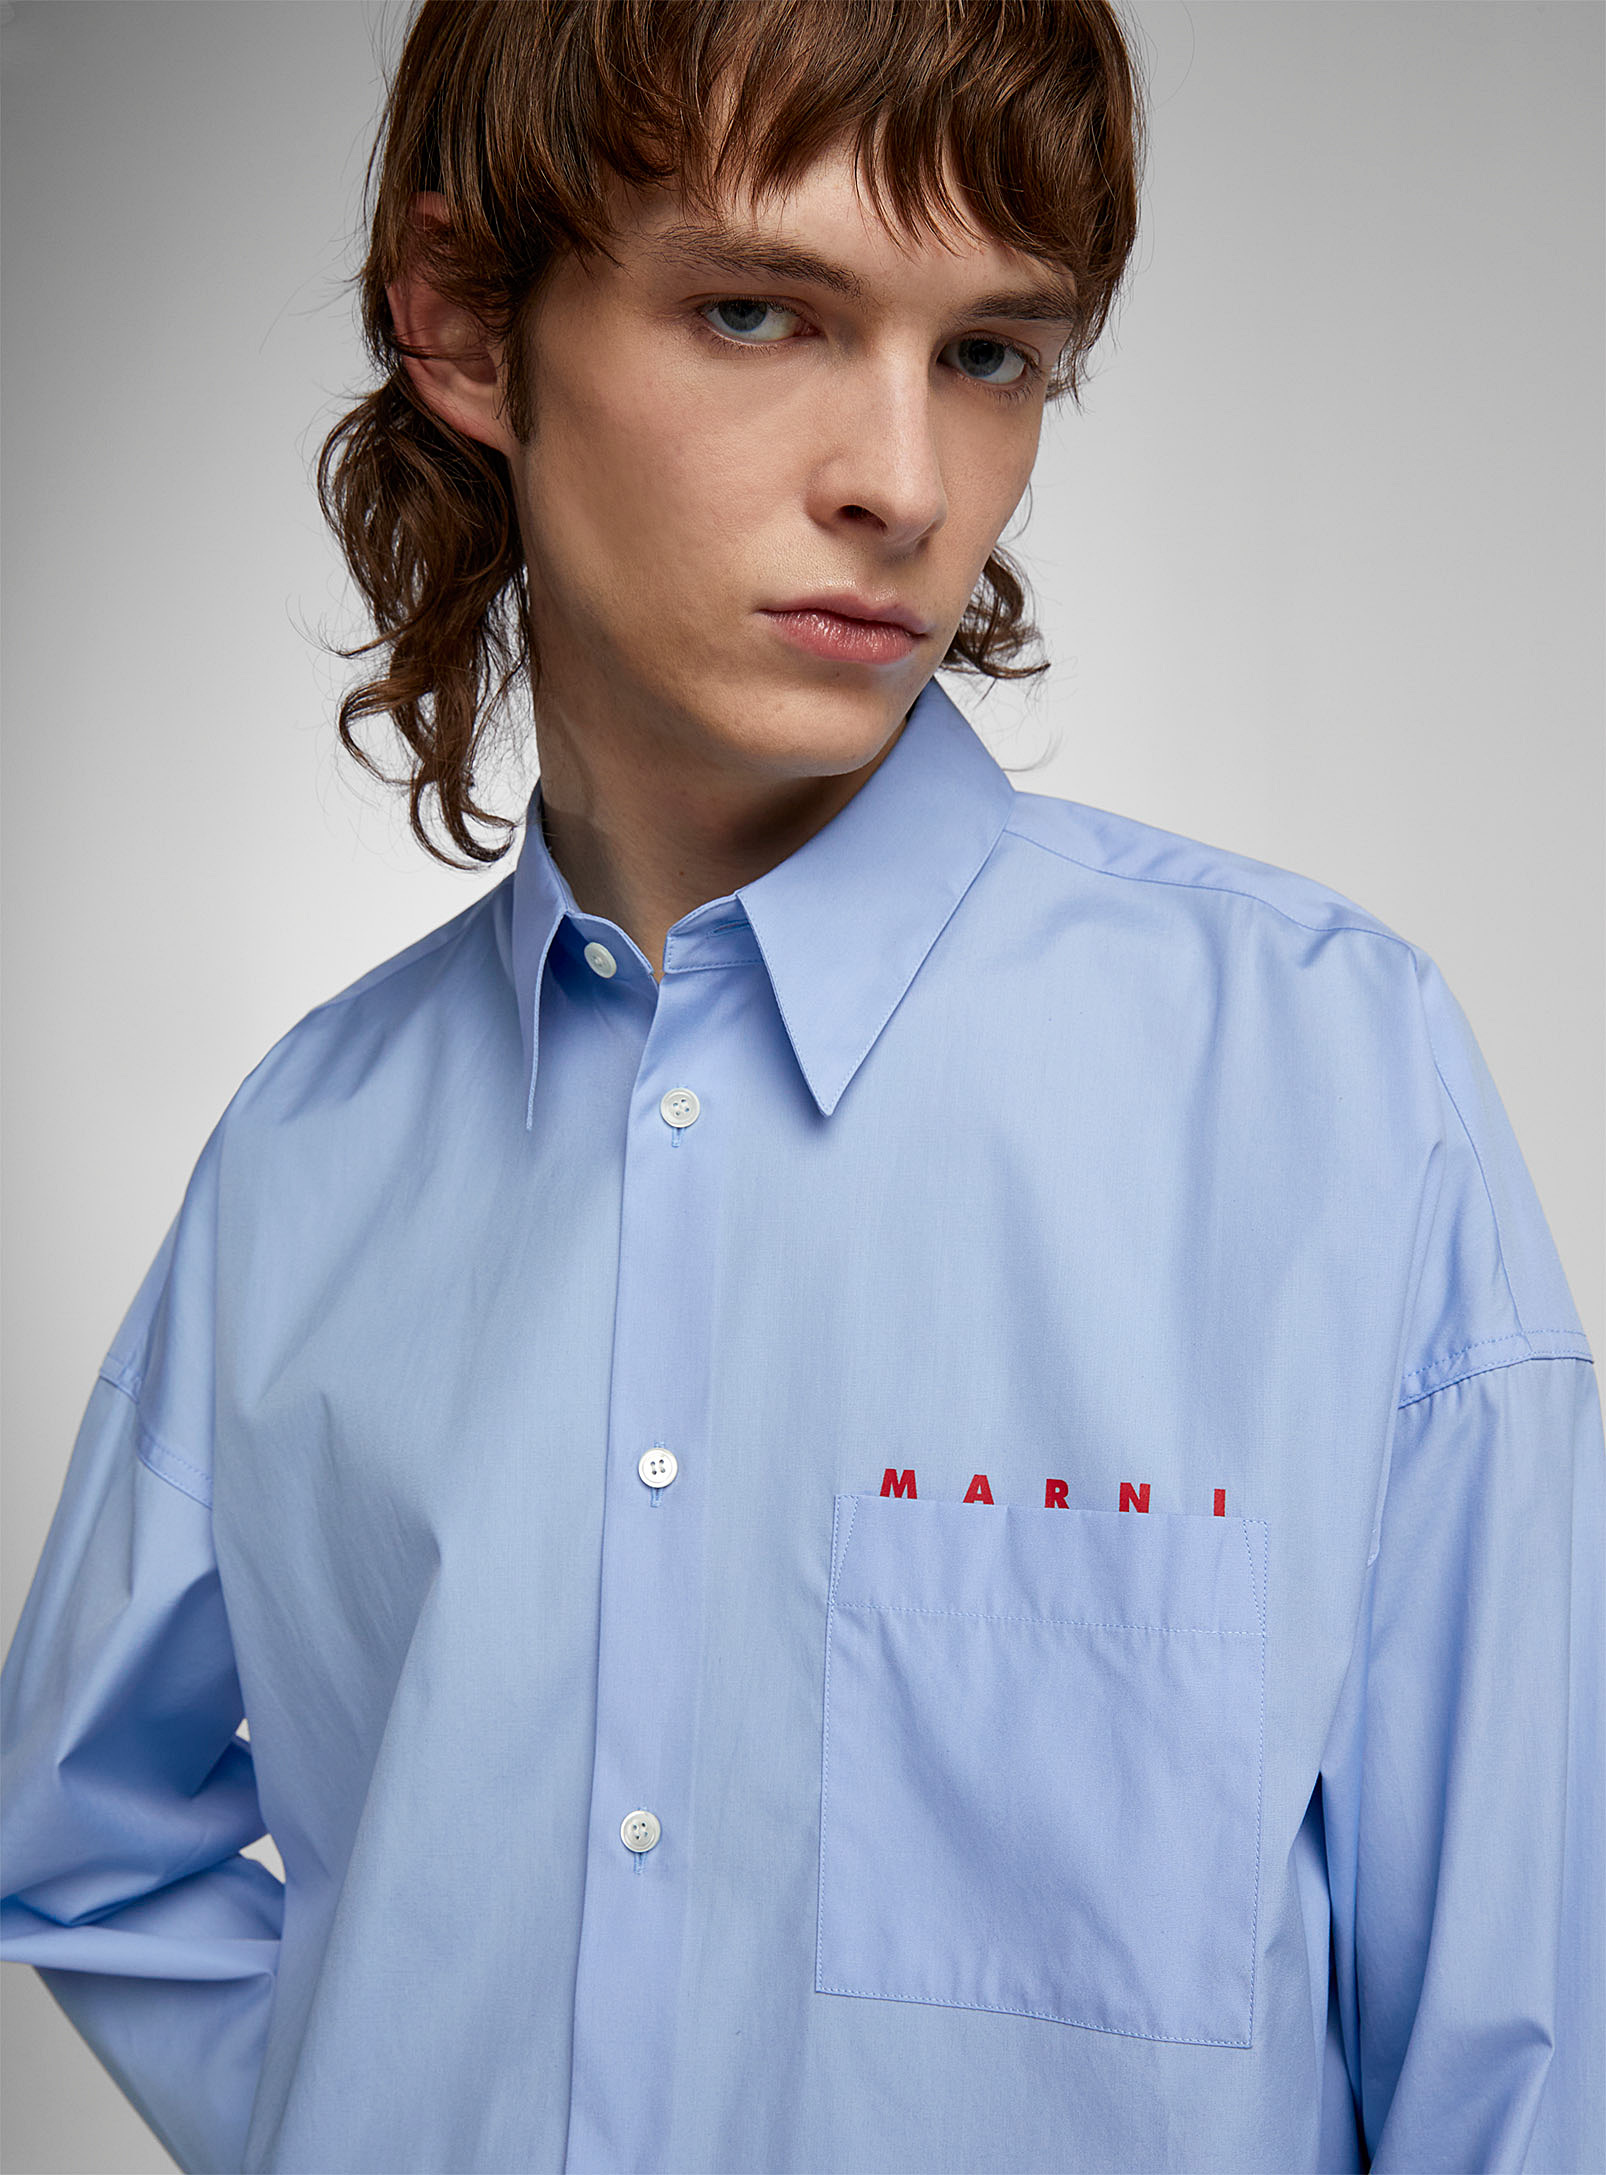 Marni Accent Signature Poplin Shirt In Blue